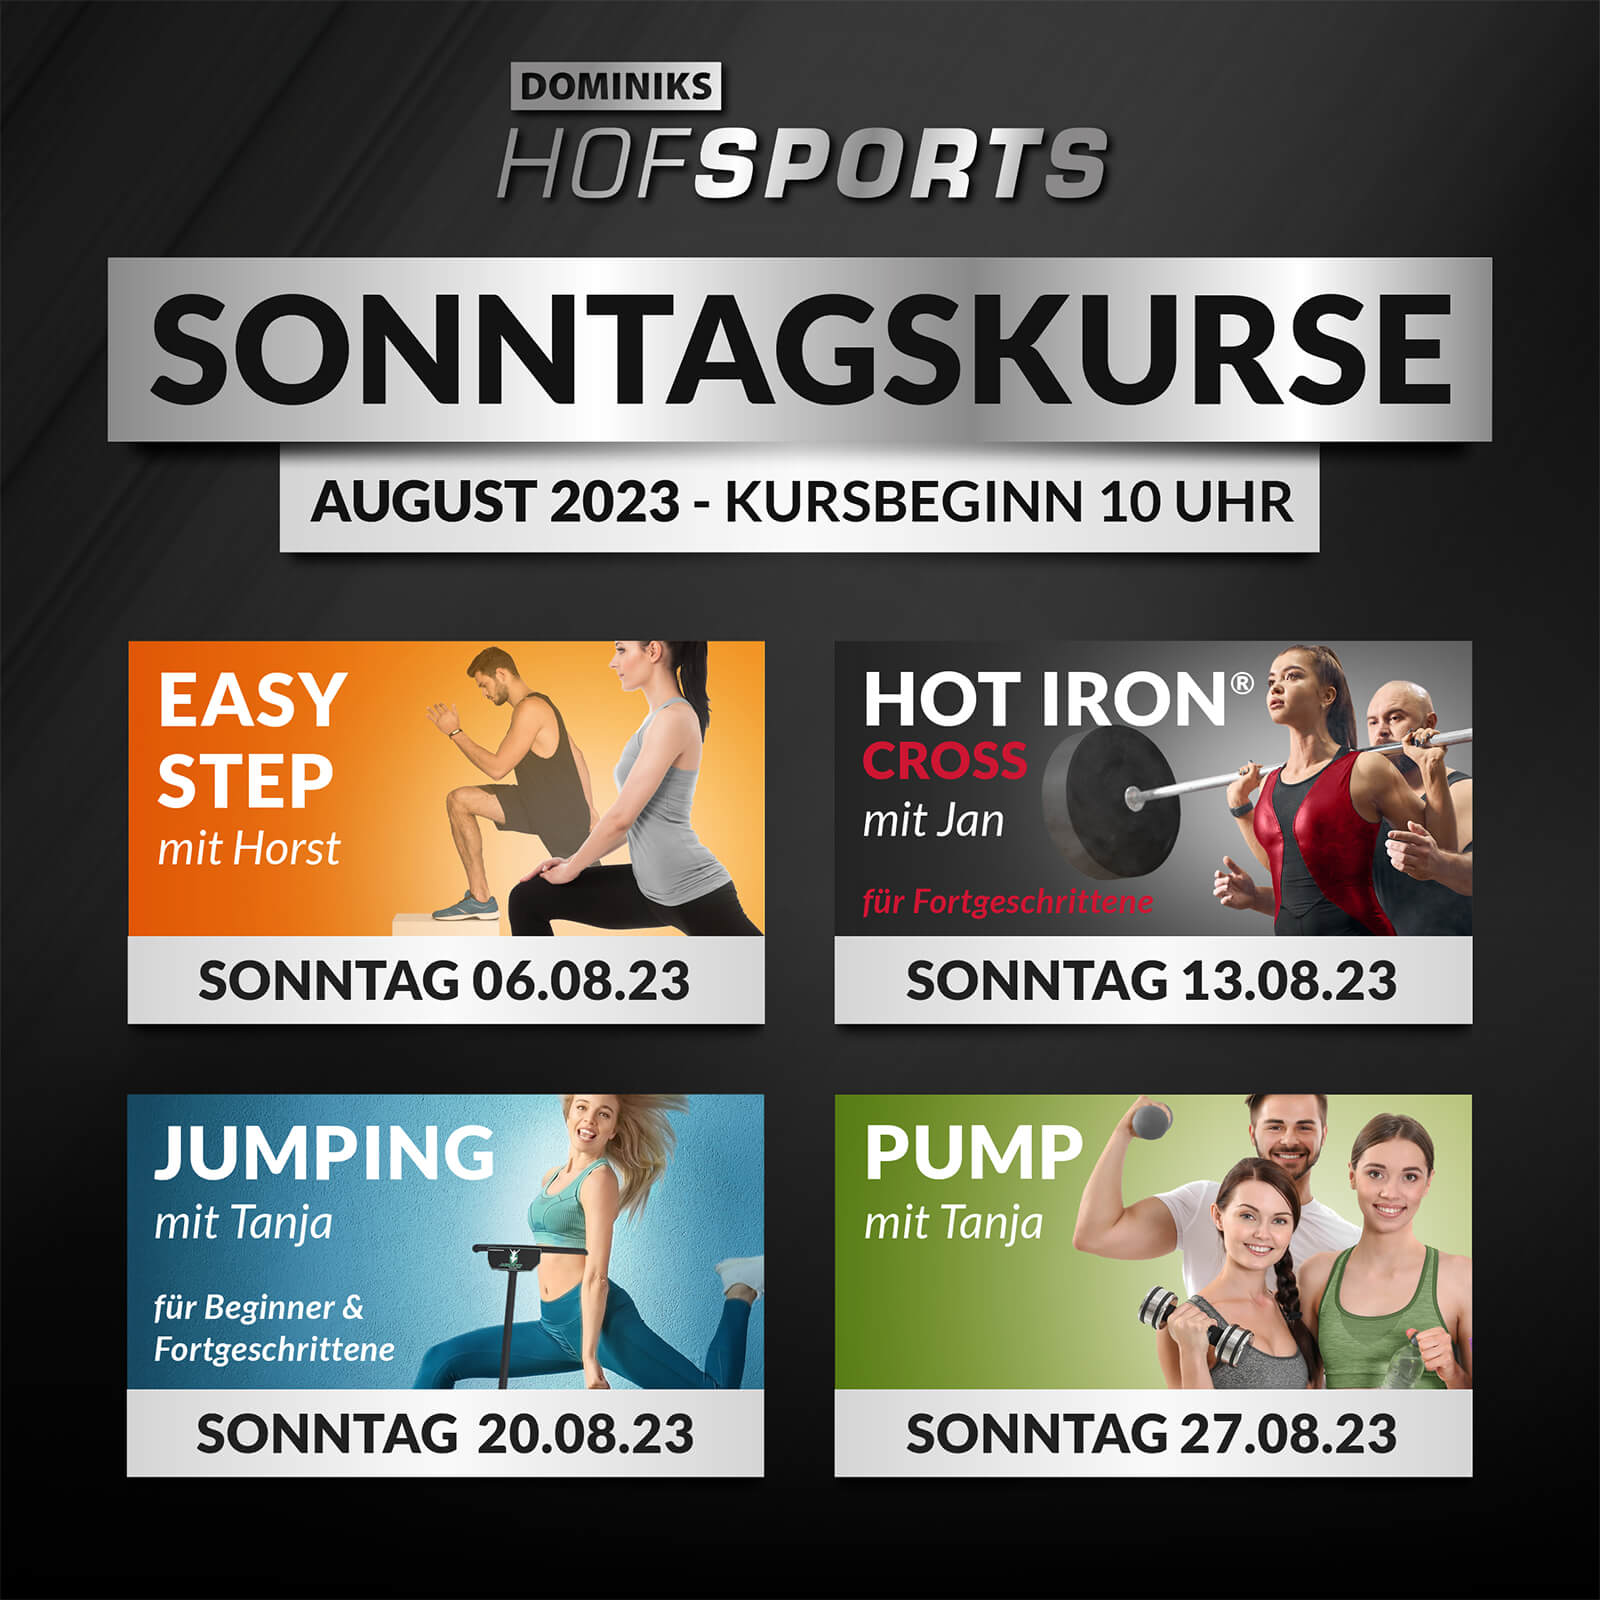 DOMINIKS HofSports Sonntagskurse im August 2023